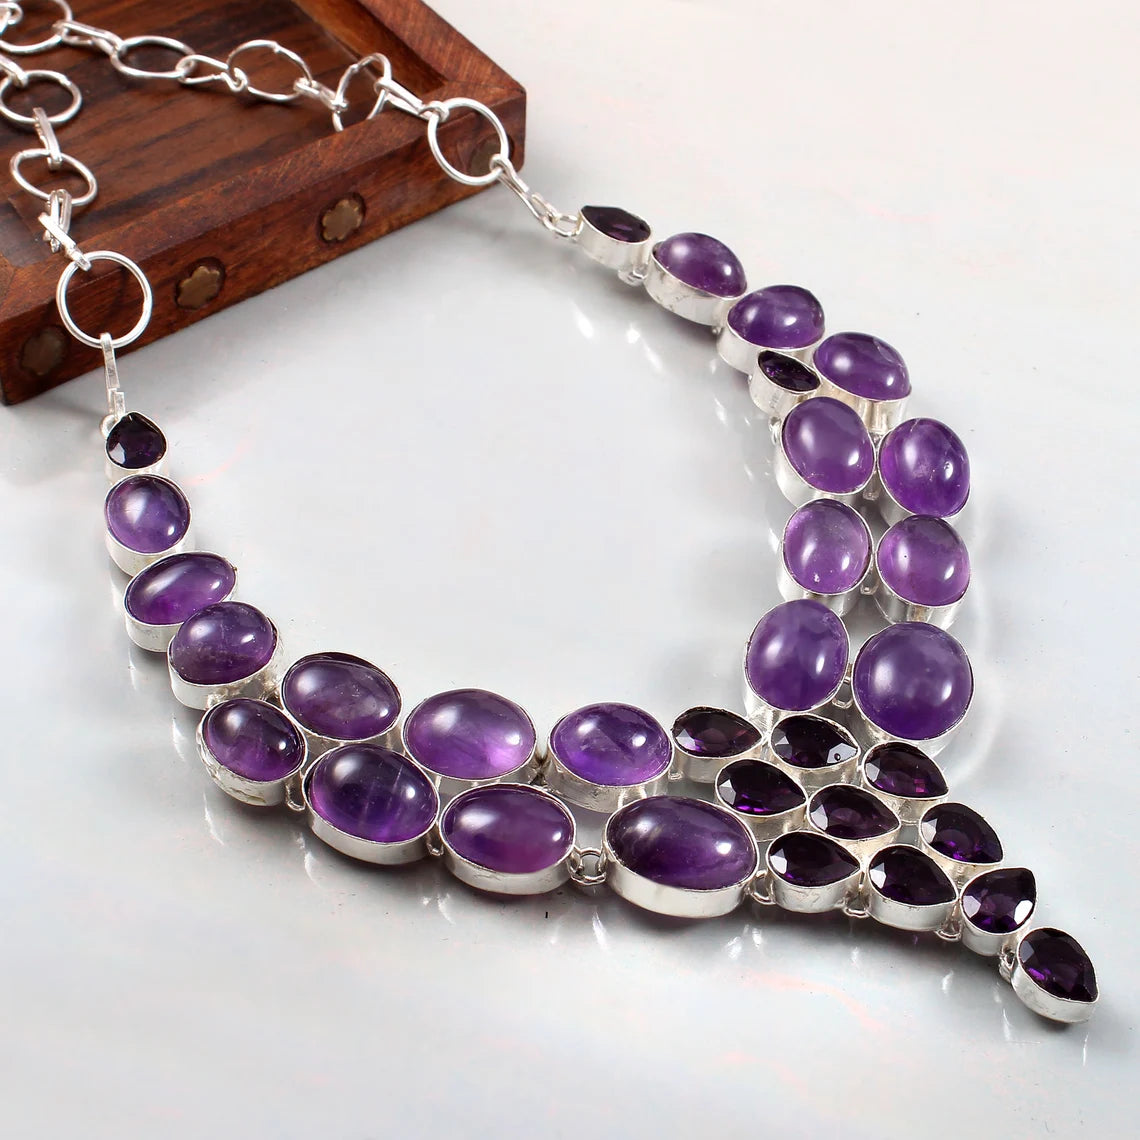 Natural Amethyst Bib Necklace For Women - 925 Sterling Silver Vintage Necklace